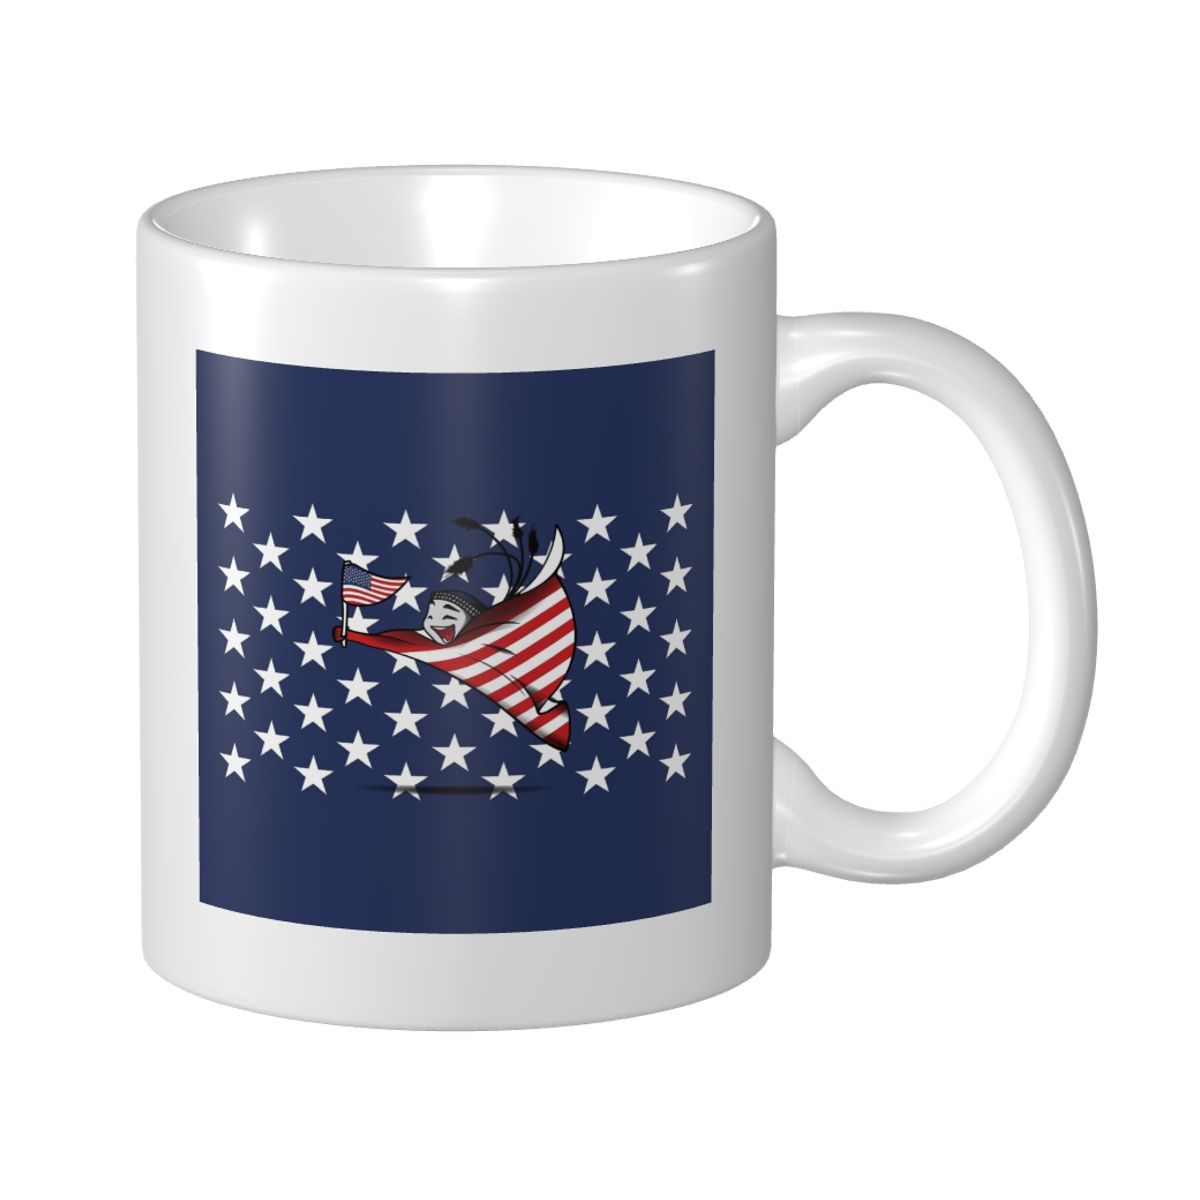 United States World Cup 2022 Mascot Ceramic Mug